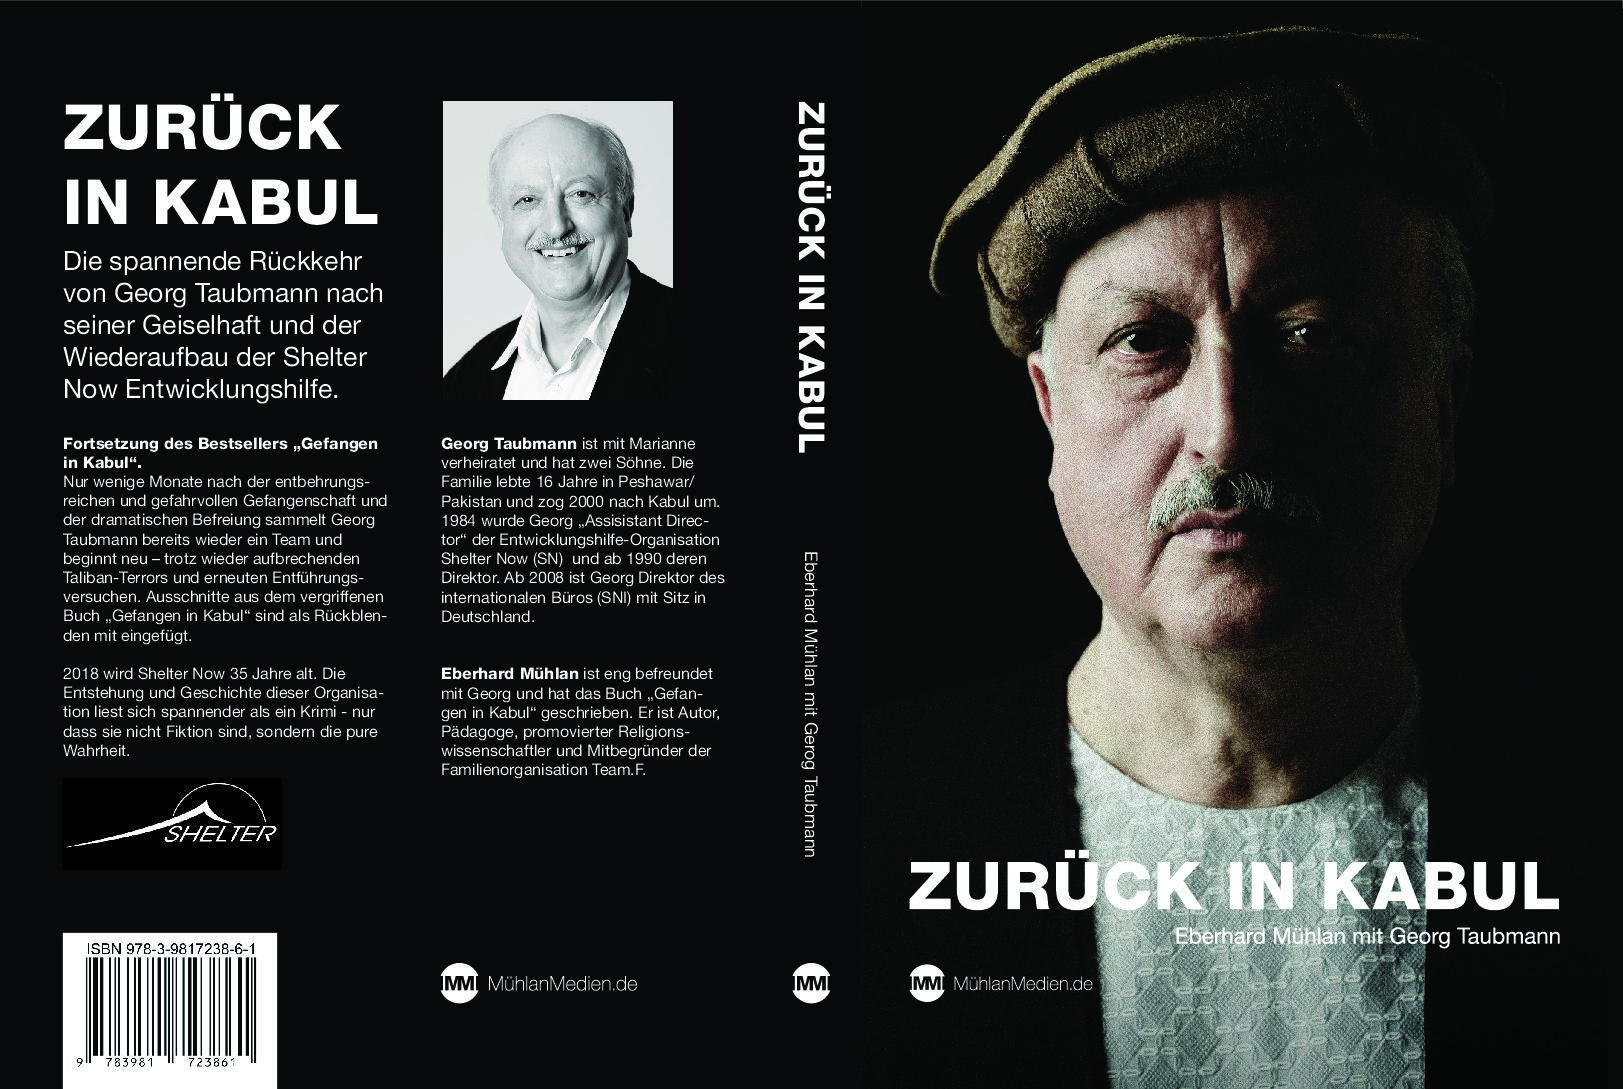 Just released: Book “Zurück in Kabul ” (Back in Kabul)